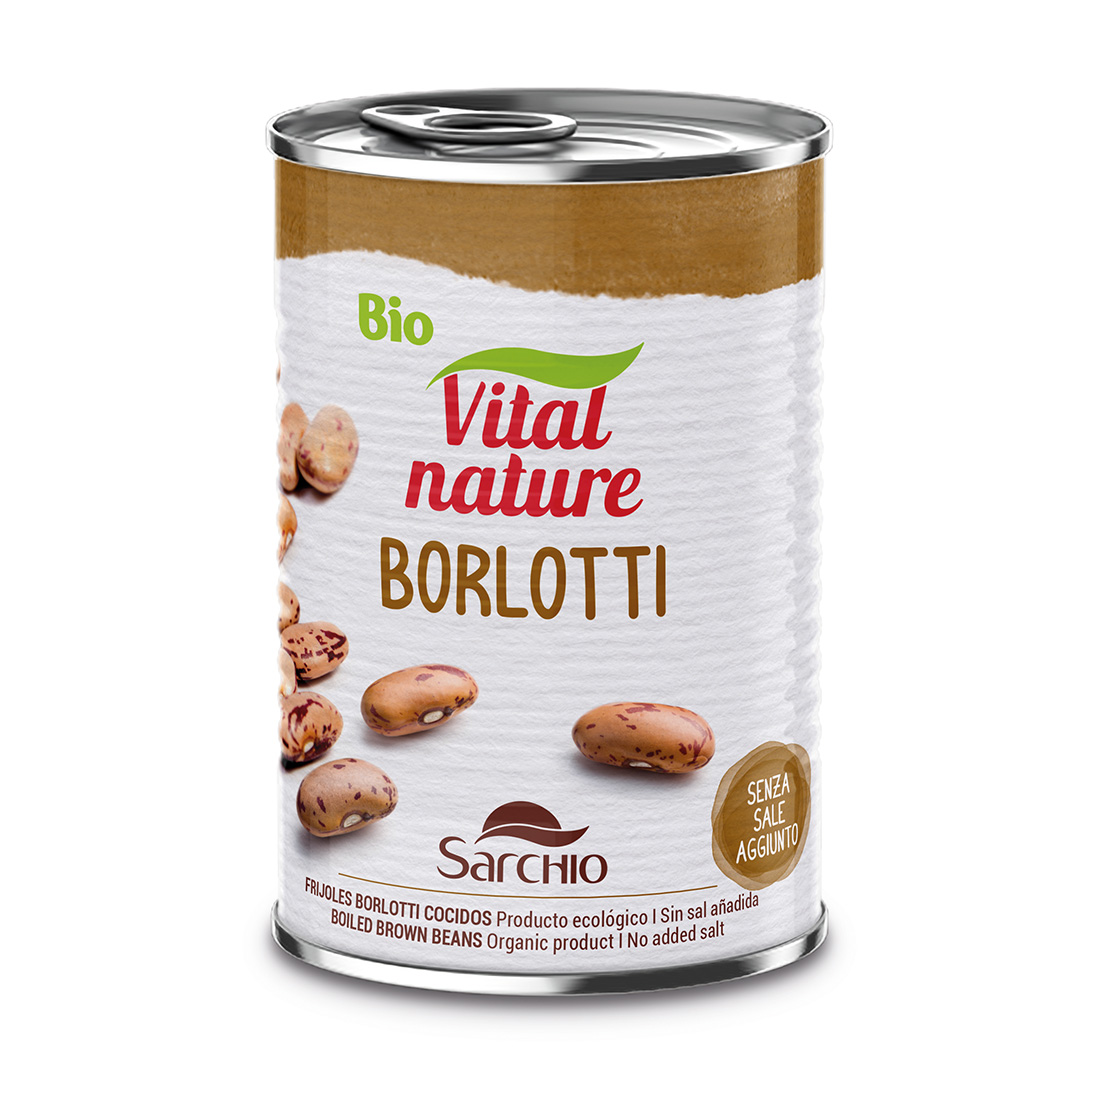 Borlotti